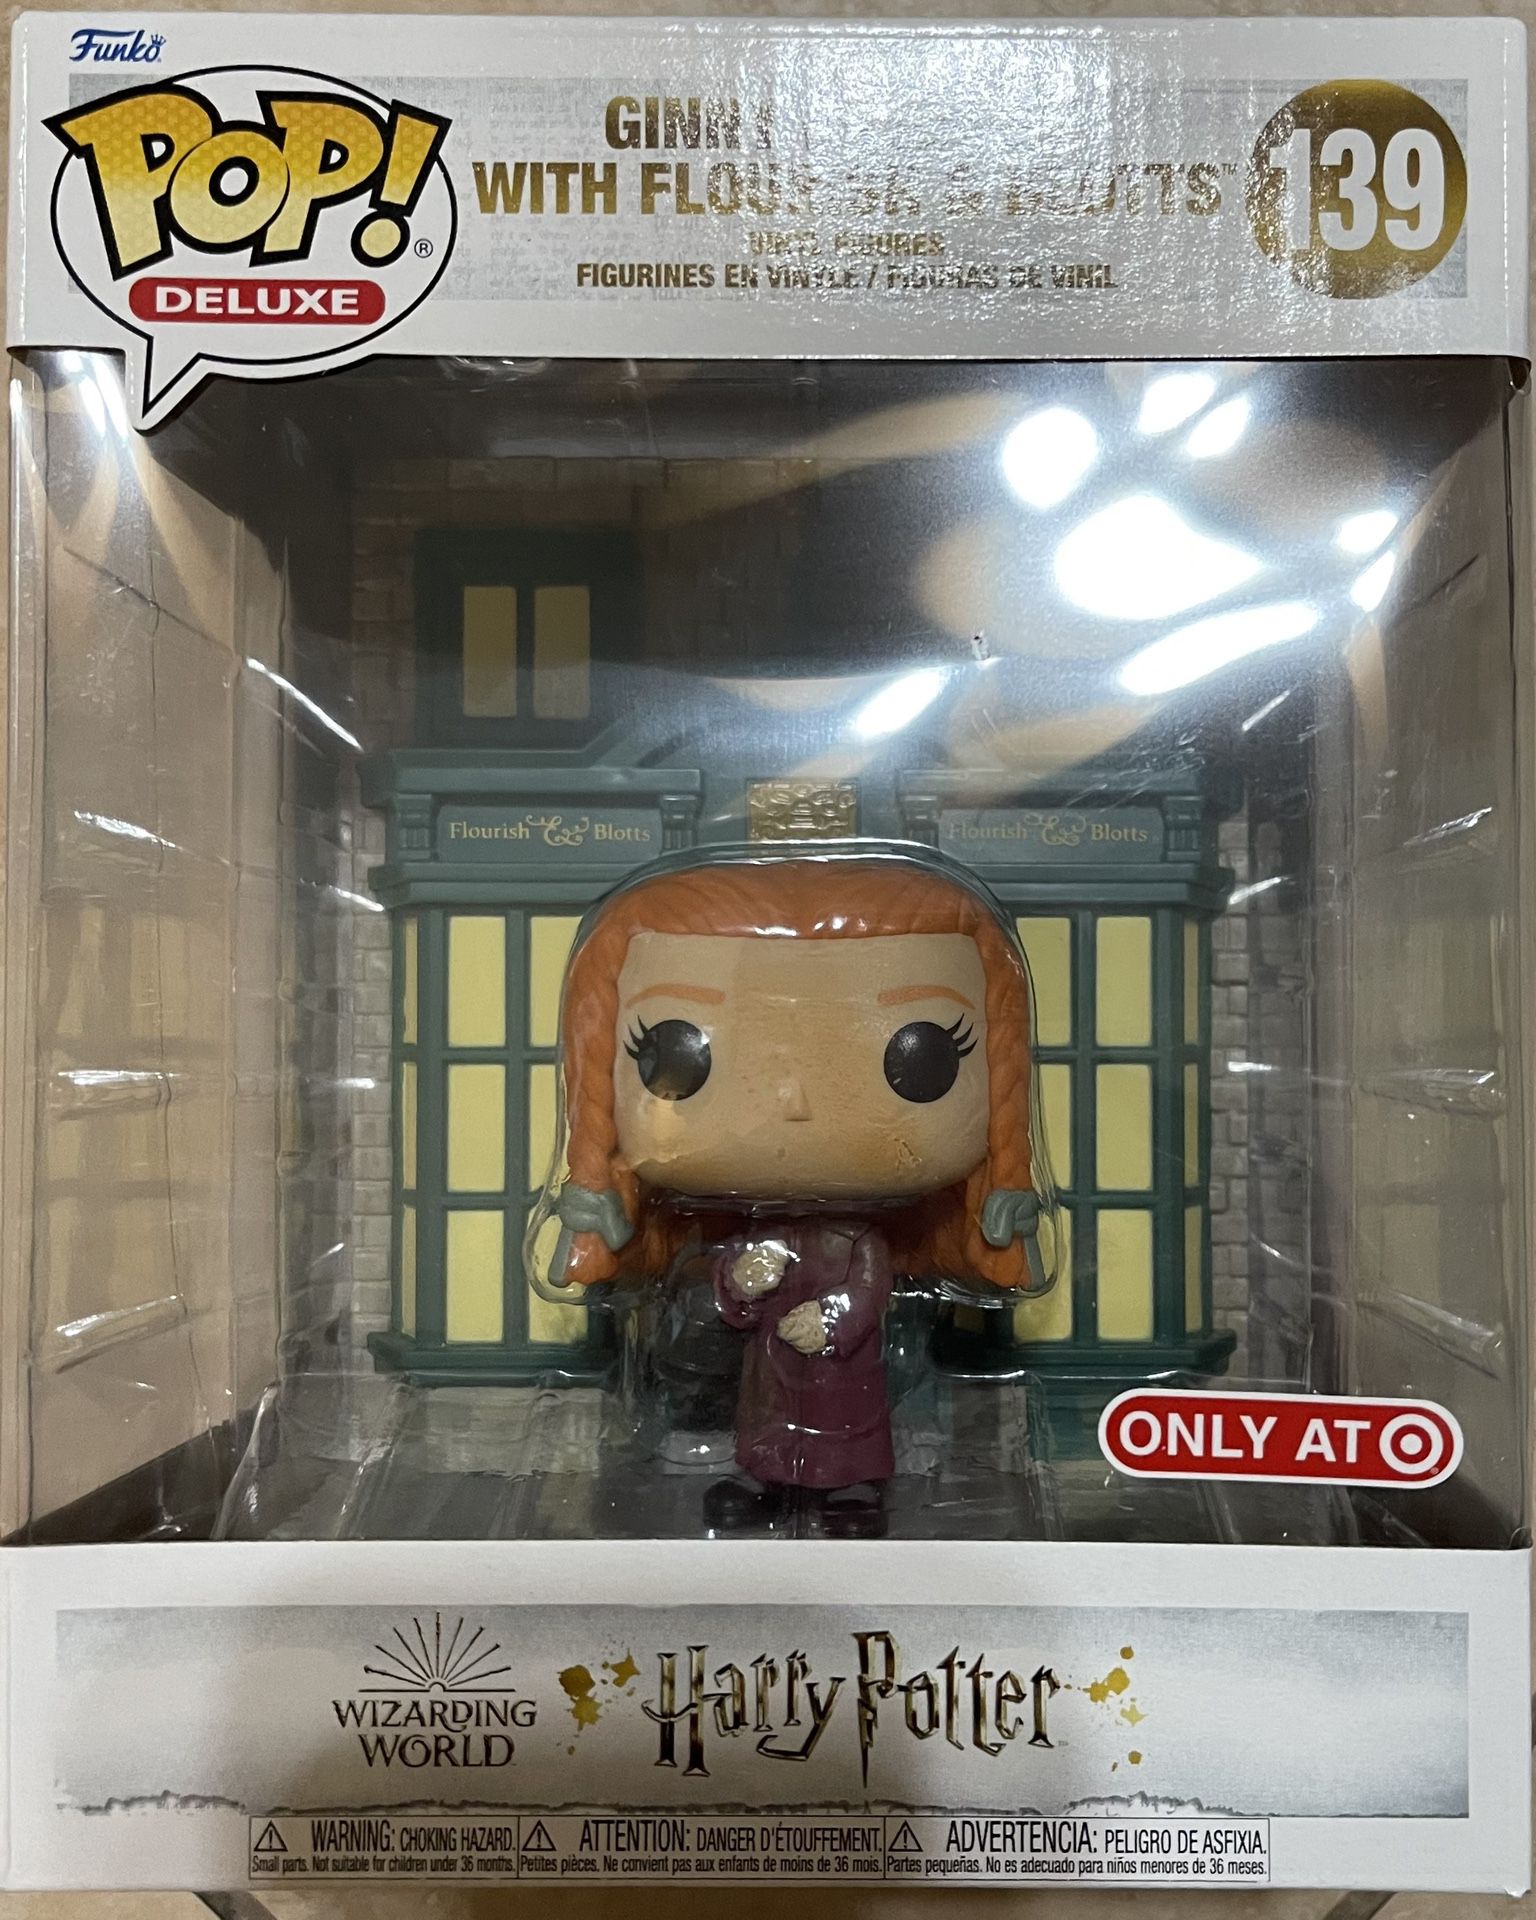 New Pop Deluxe Harry Potter Ginny Weasley With Flourish & Blotts 